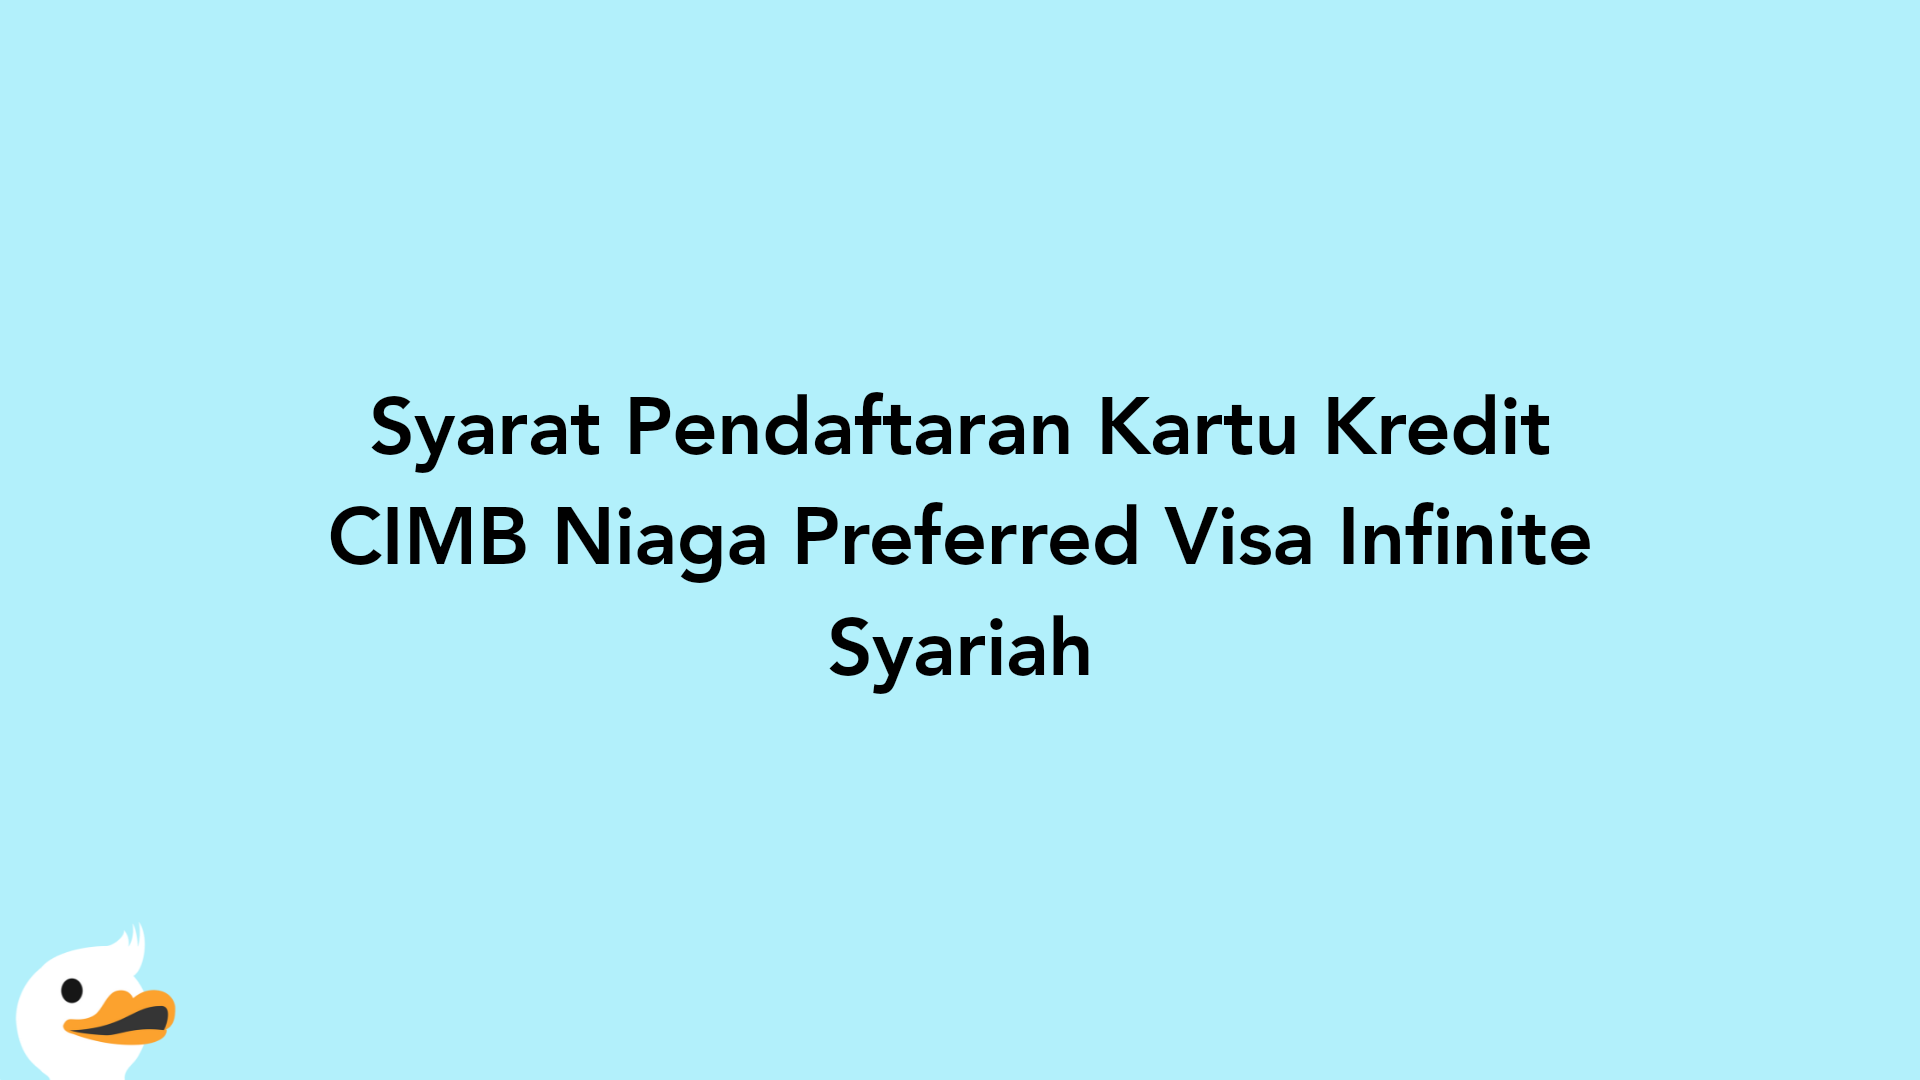 Syarat Pendaftaran Kartu Kredit CIMB Niaga Preferred Visa Infinite Syariah